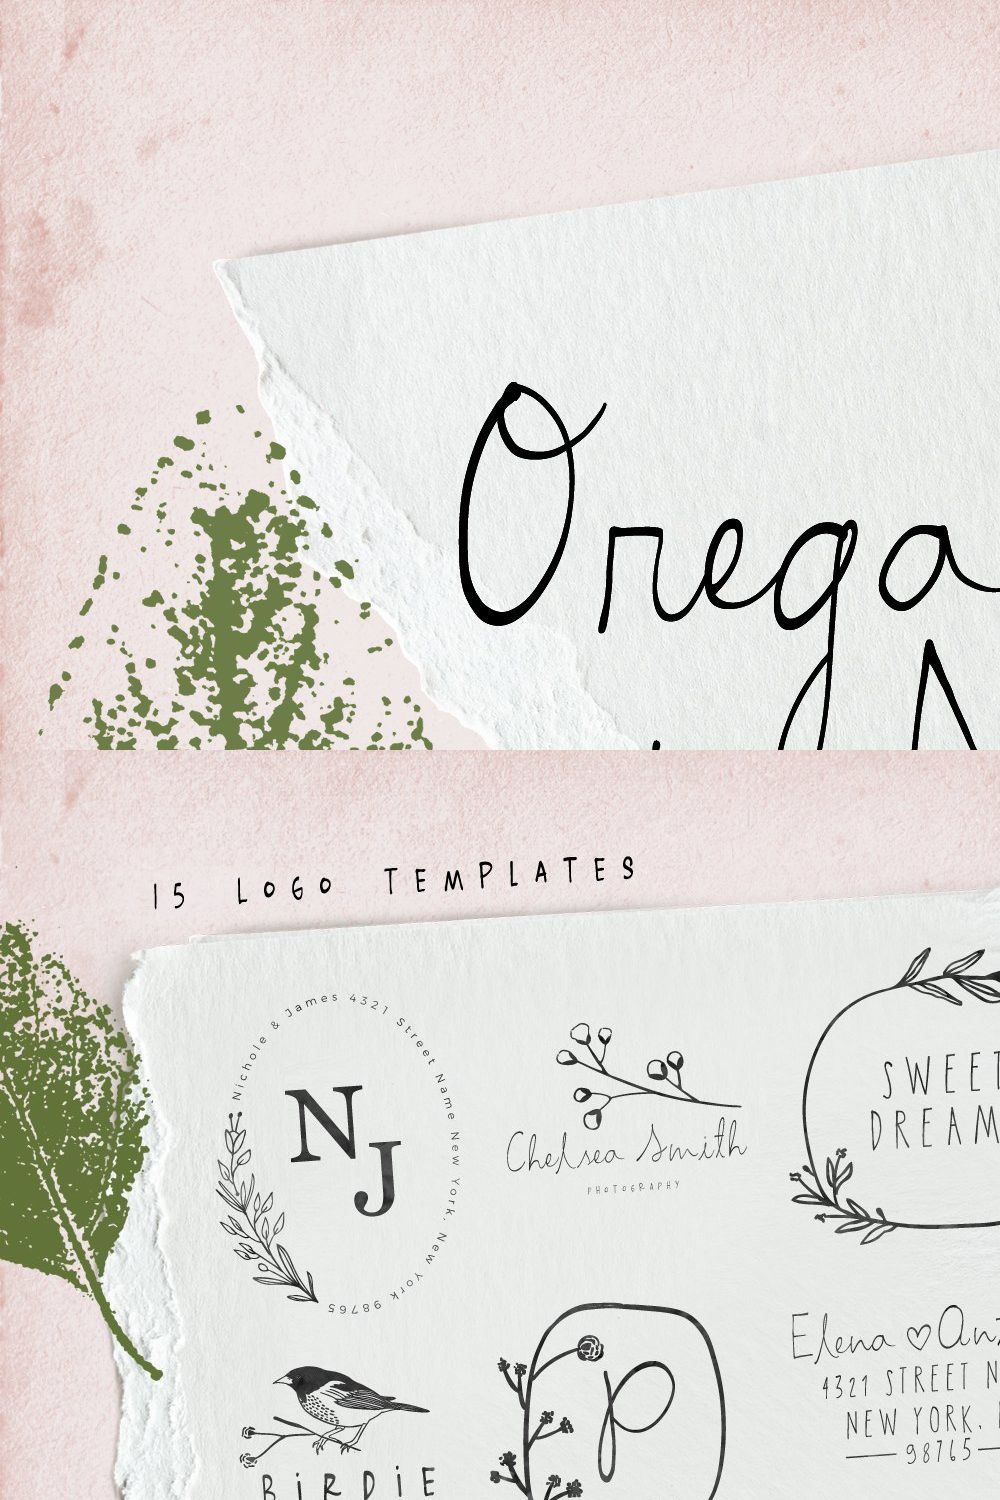 Script Font and Logos - Oregano Mint pinterest preview image.